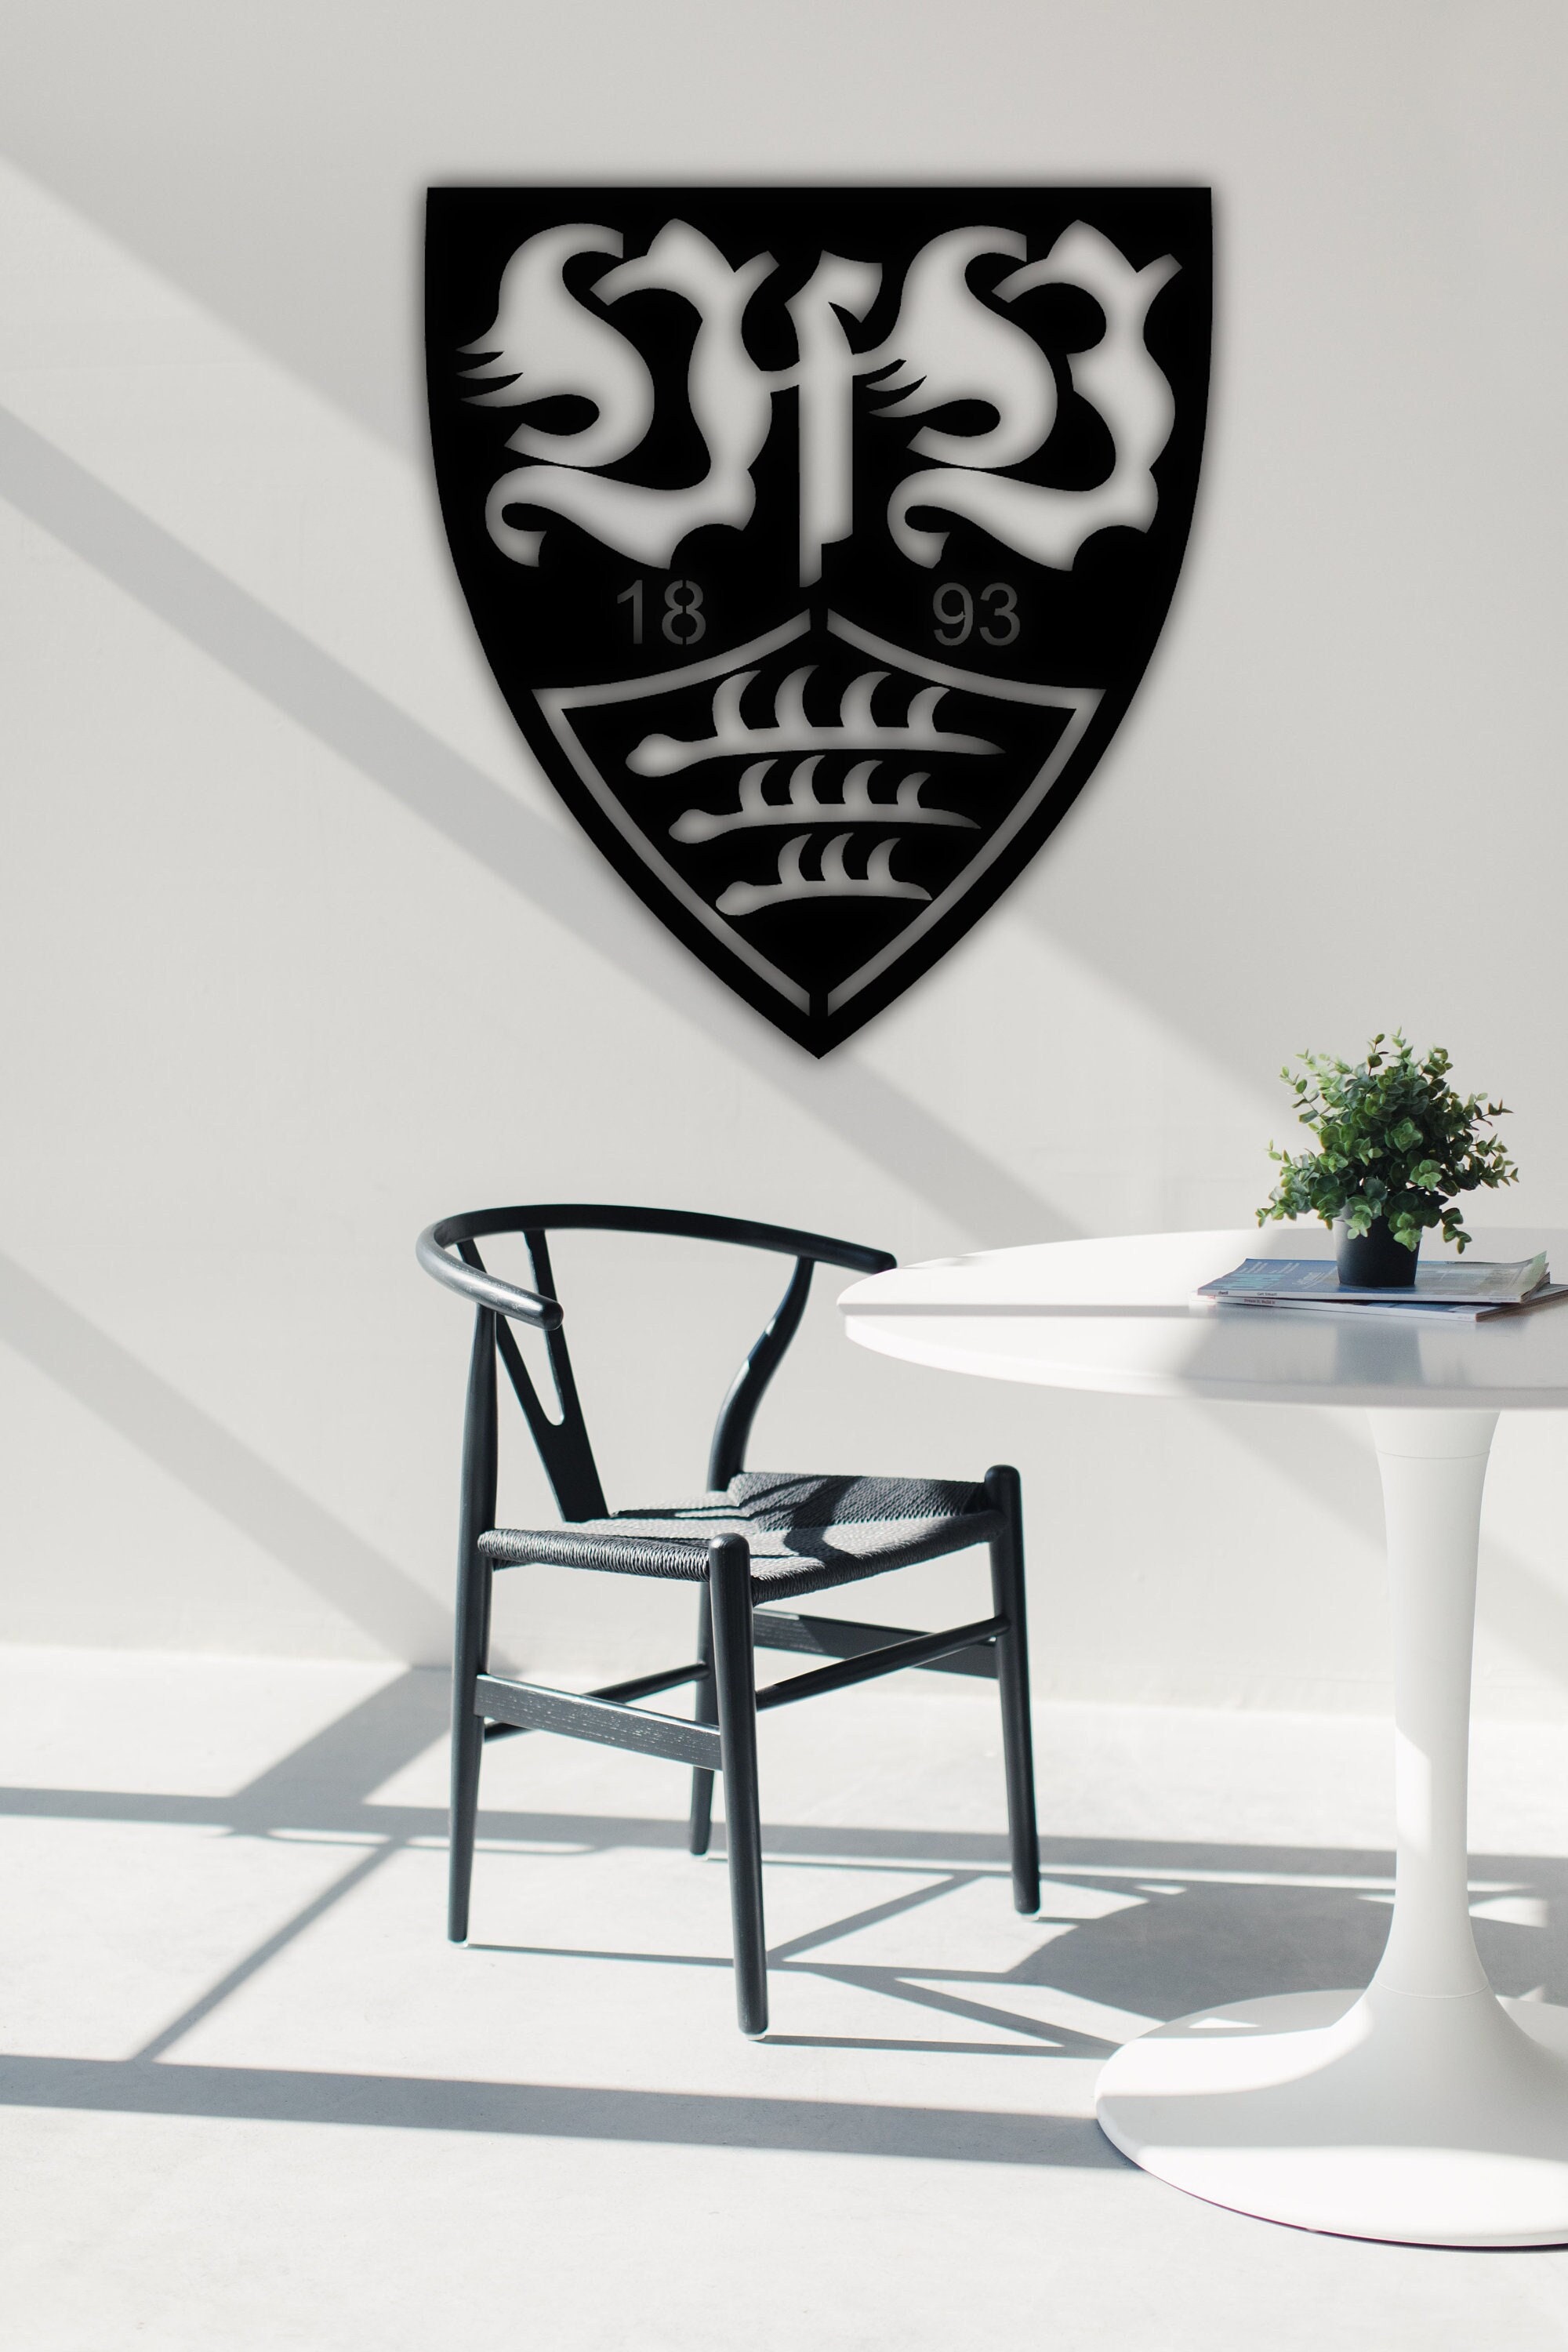 Vfb Stuttgart Football Logo Metal Table Decoration Decor Present Gift Wall - Art Picture Etsy